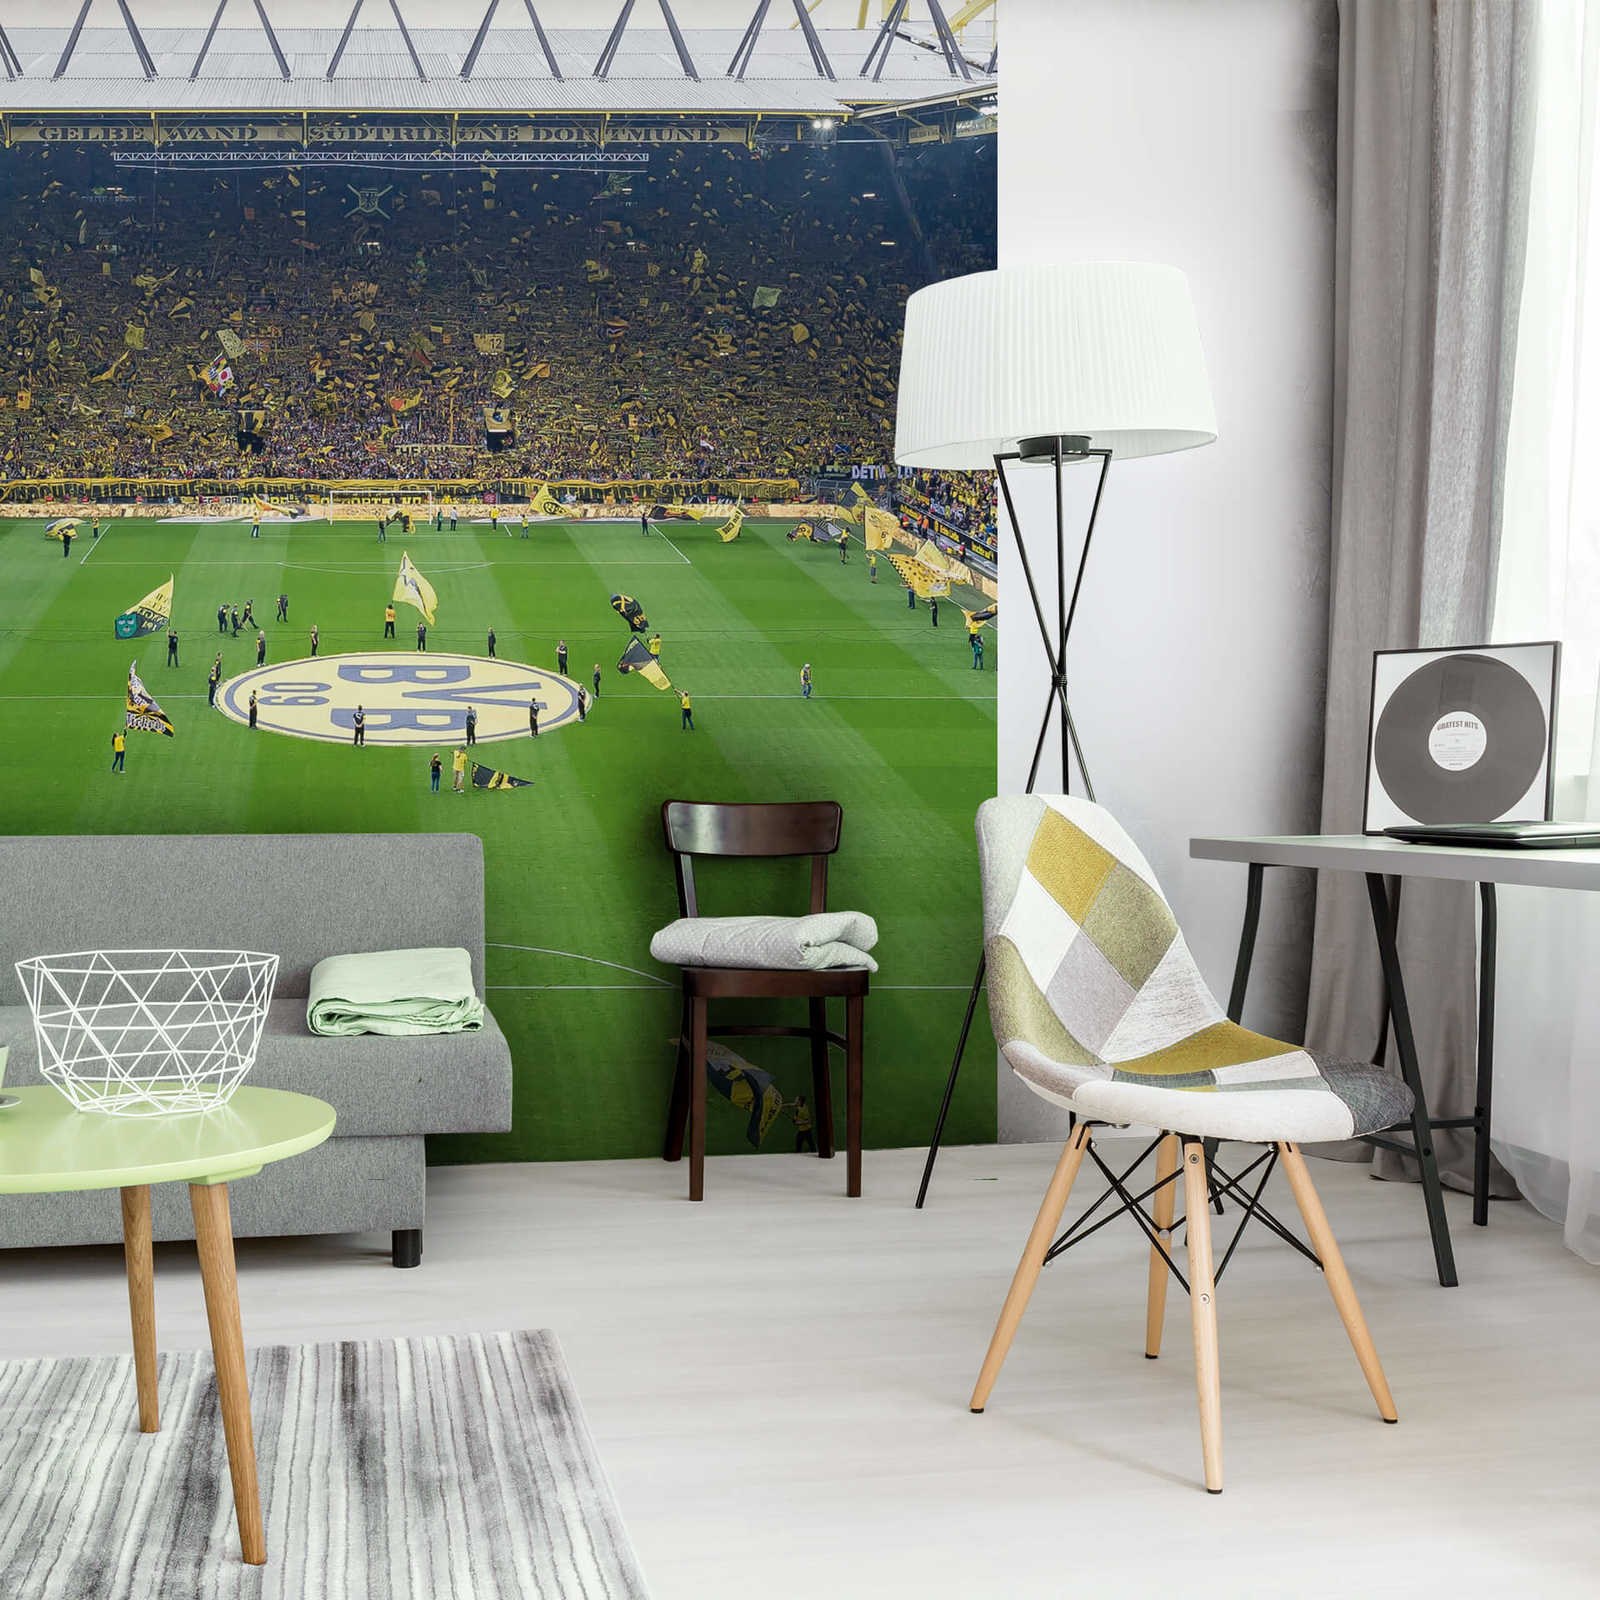             Fotomurali Stadio BVB con tifosi, formato verticale
        